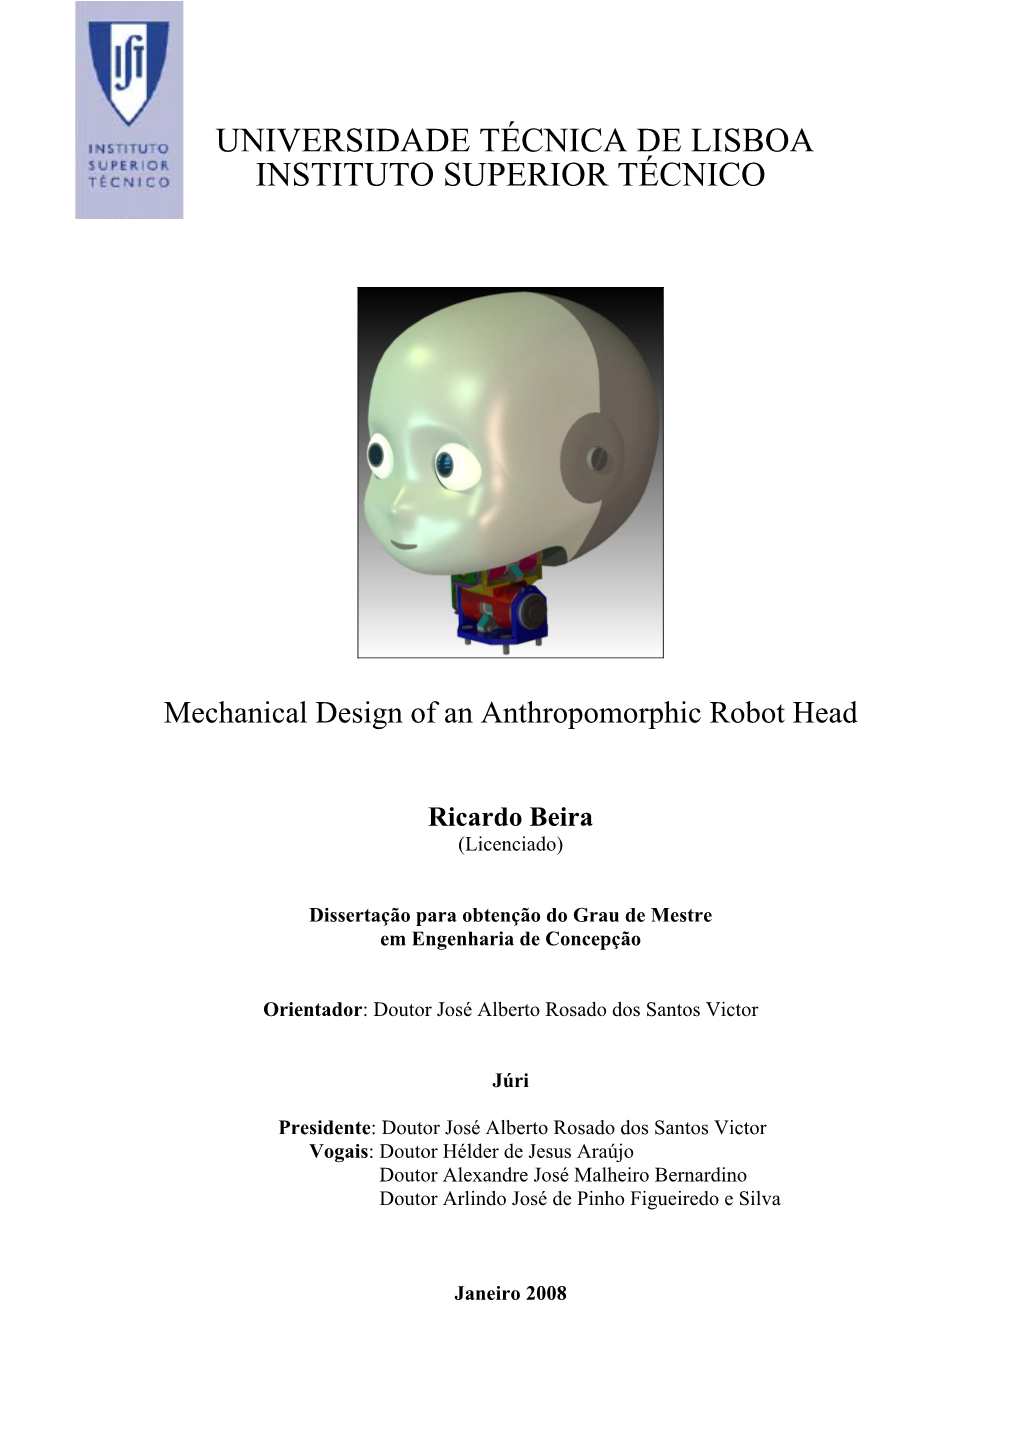 Mechanical Design of an Anthropomorphic Robot Head